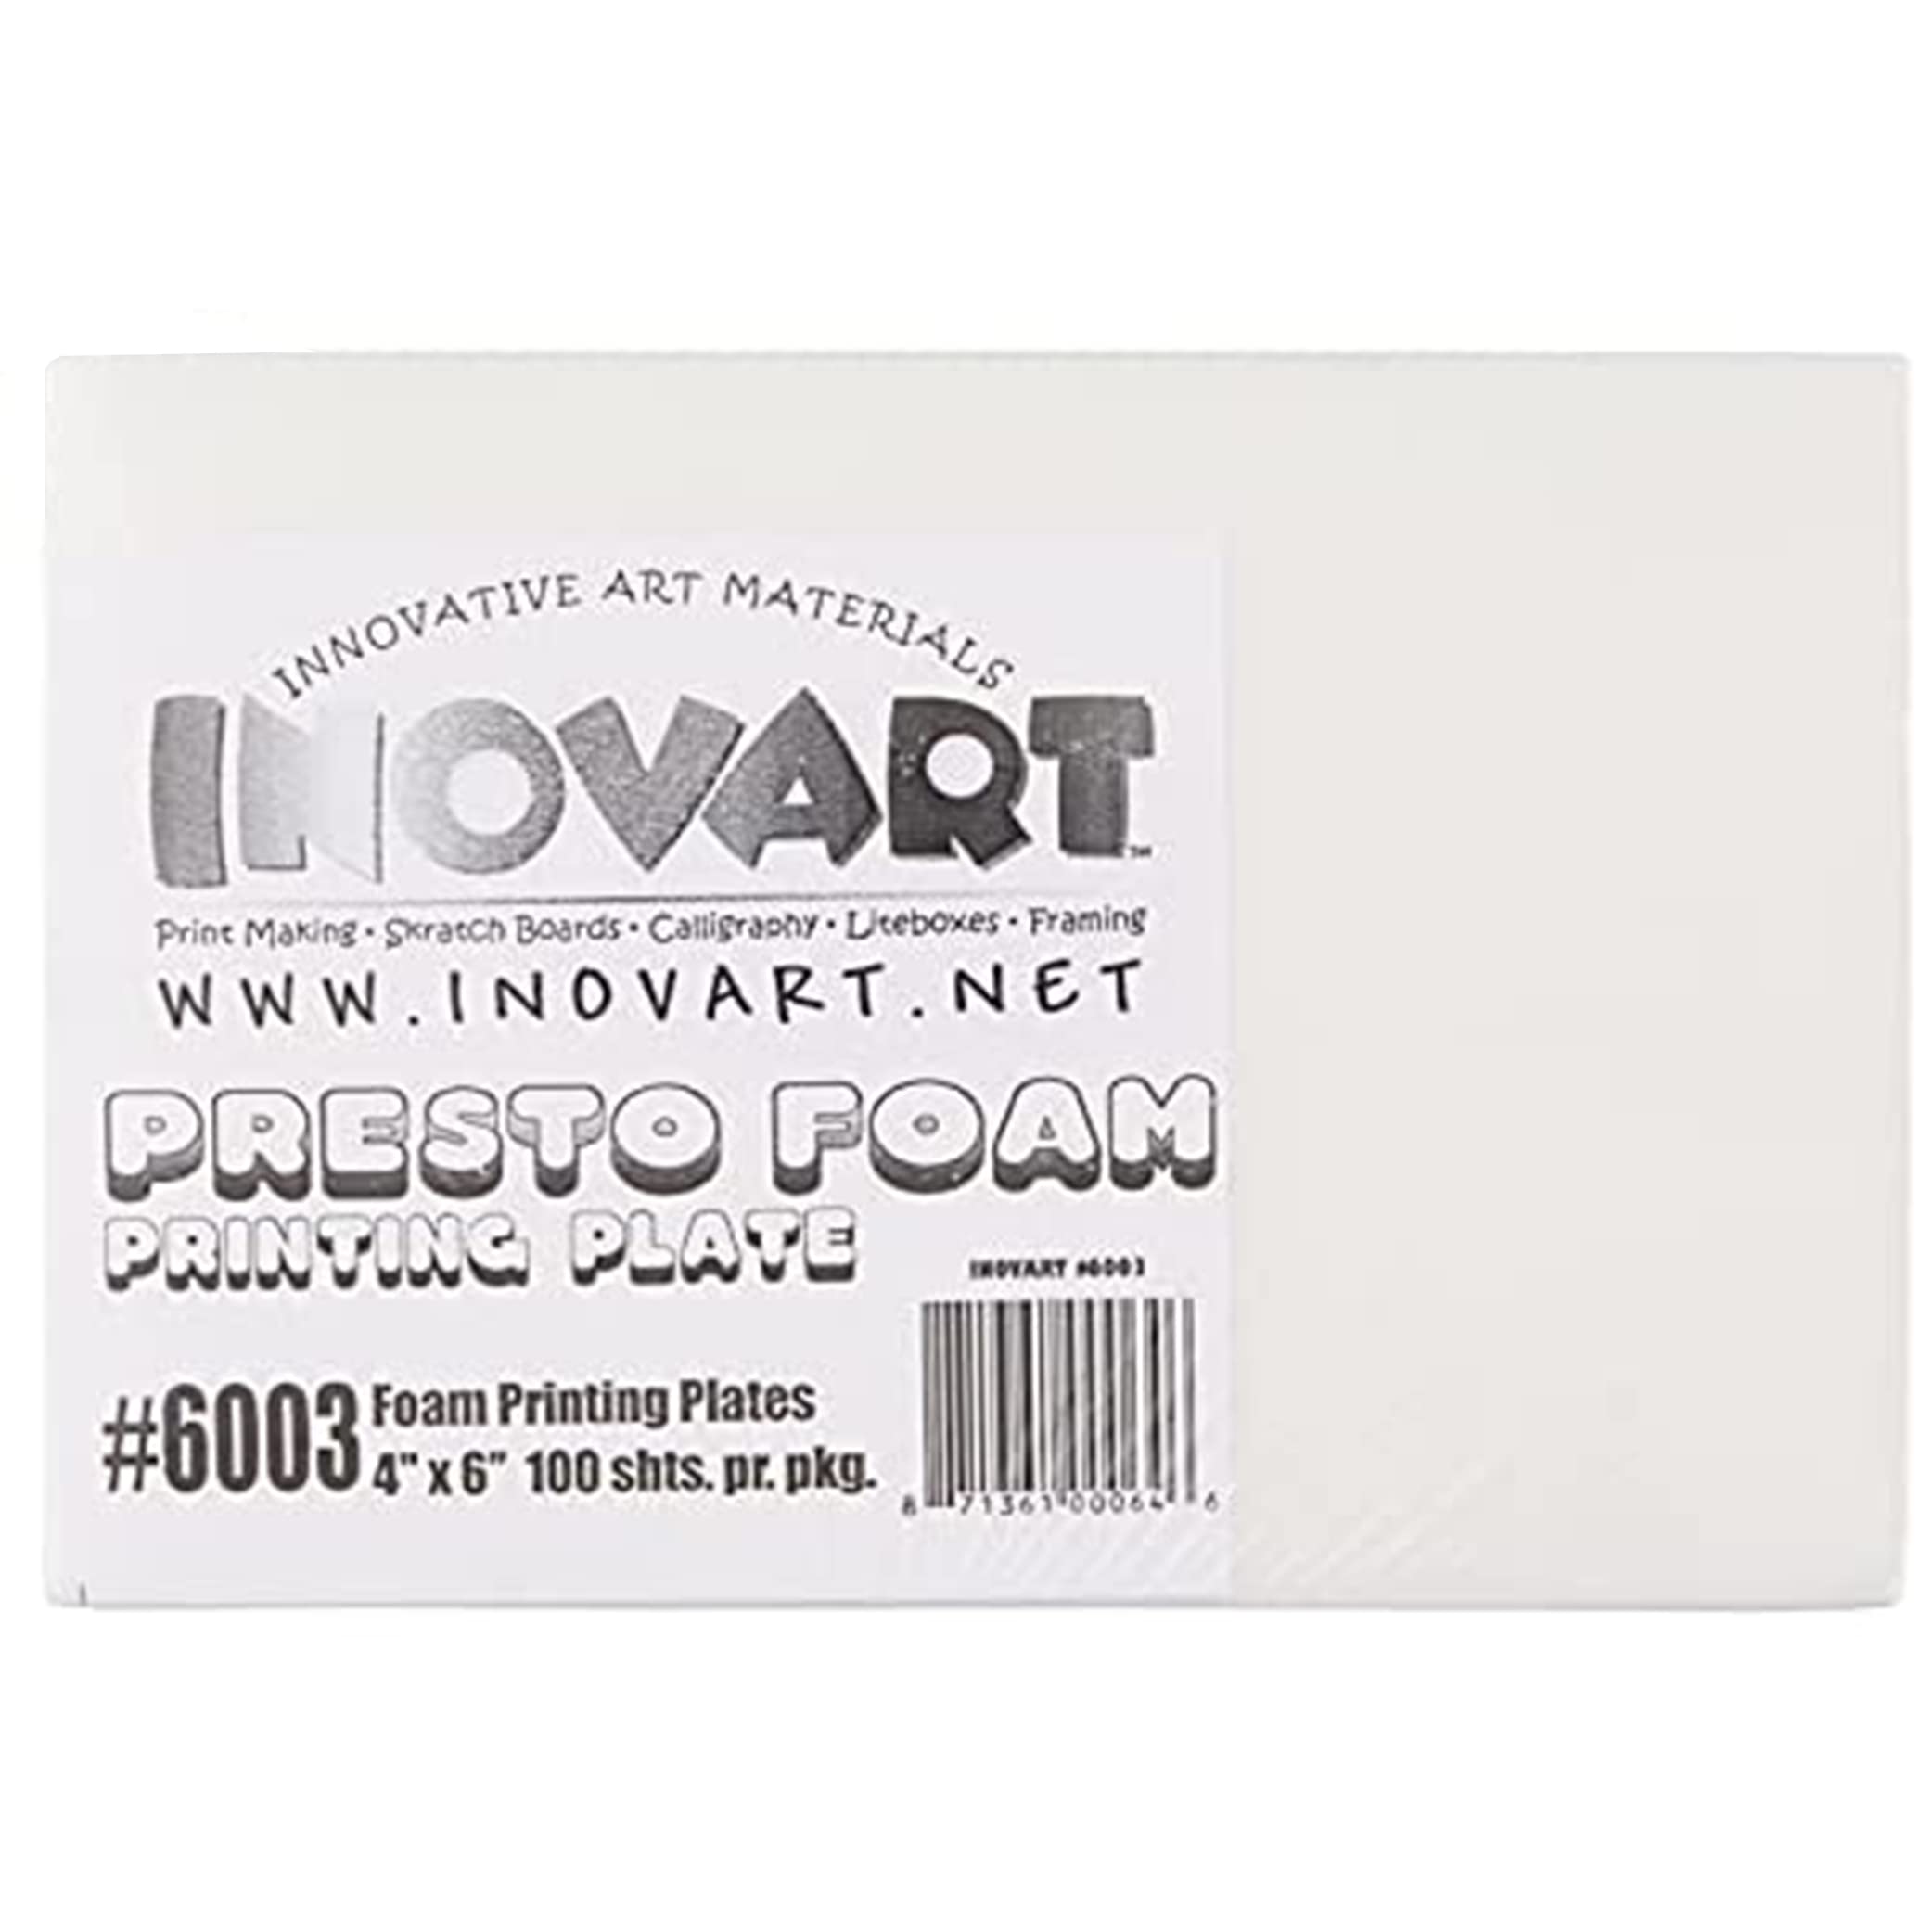 INOVART Presto Foam Printing Plates Econo Pack, 4